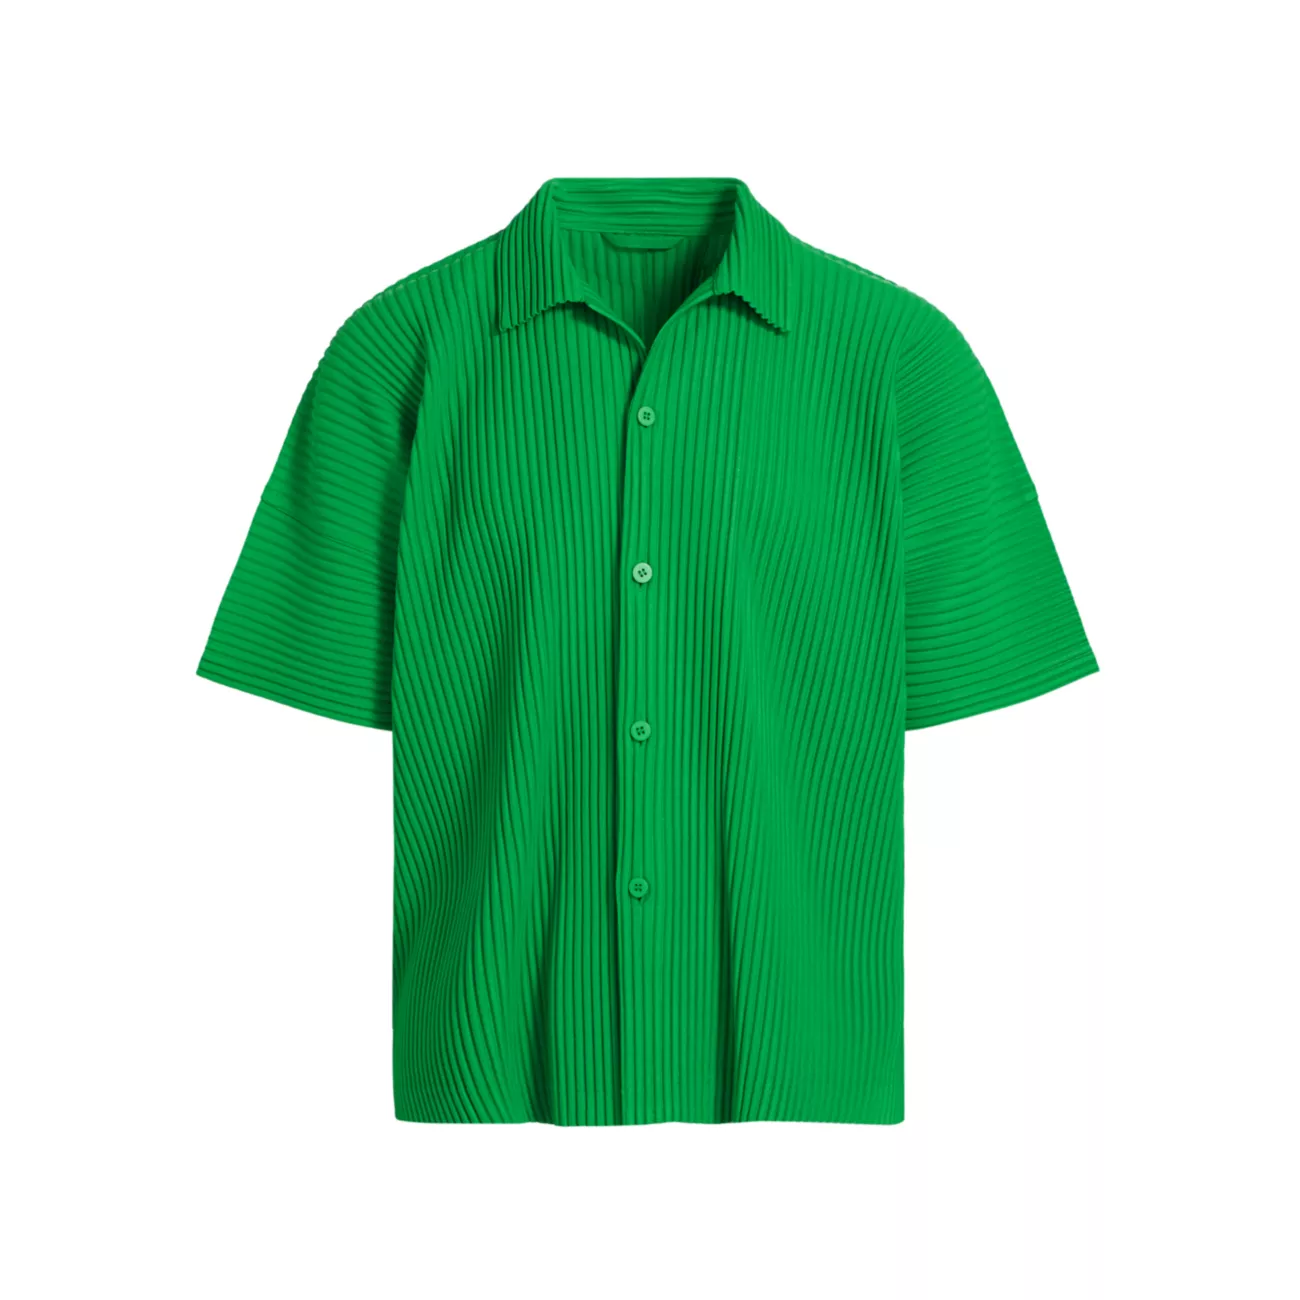 Рубашка июля со складками на пуговицах спереди Homme Plissé Issey Miyake